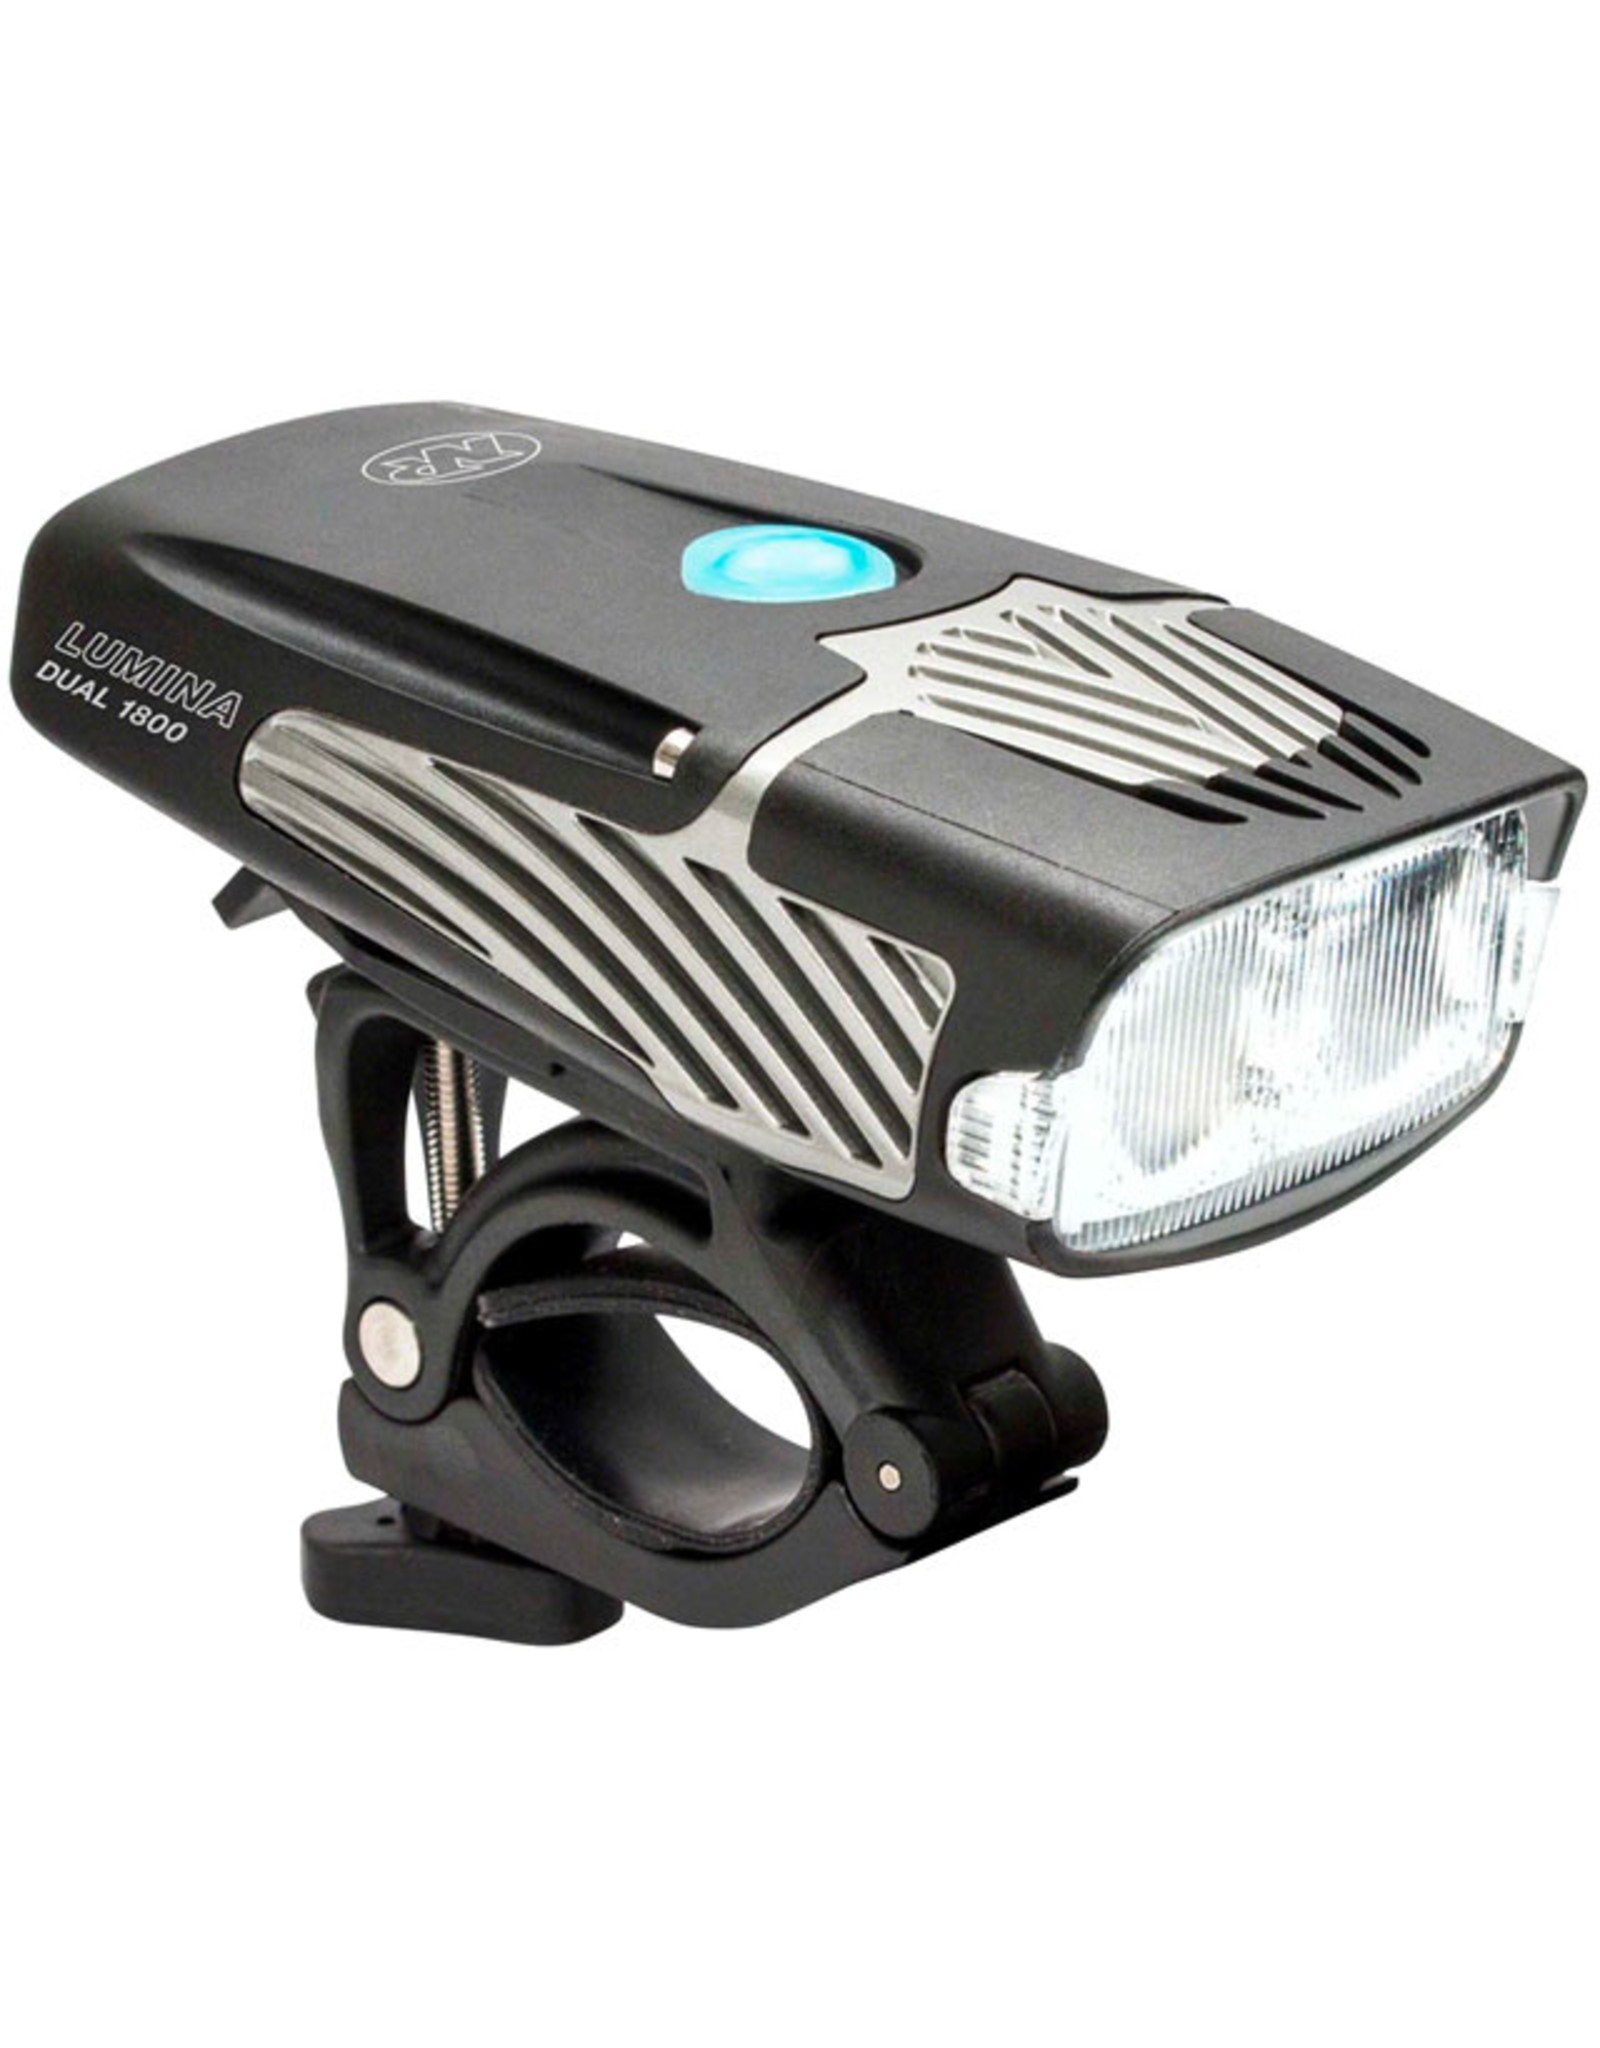 NiteRider Lumina Dual 1800 Headlight